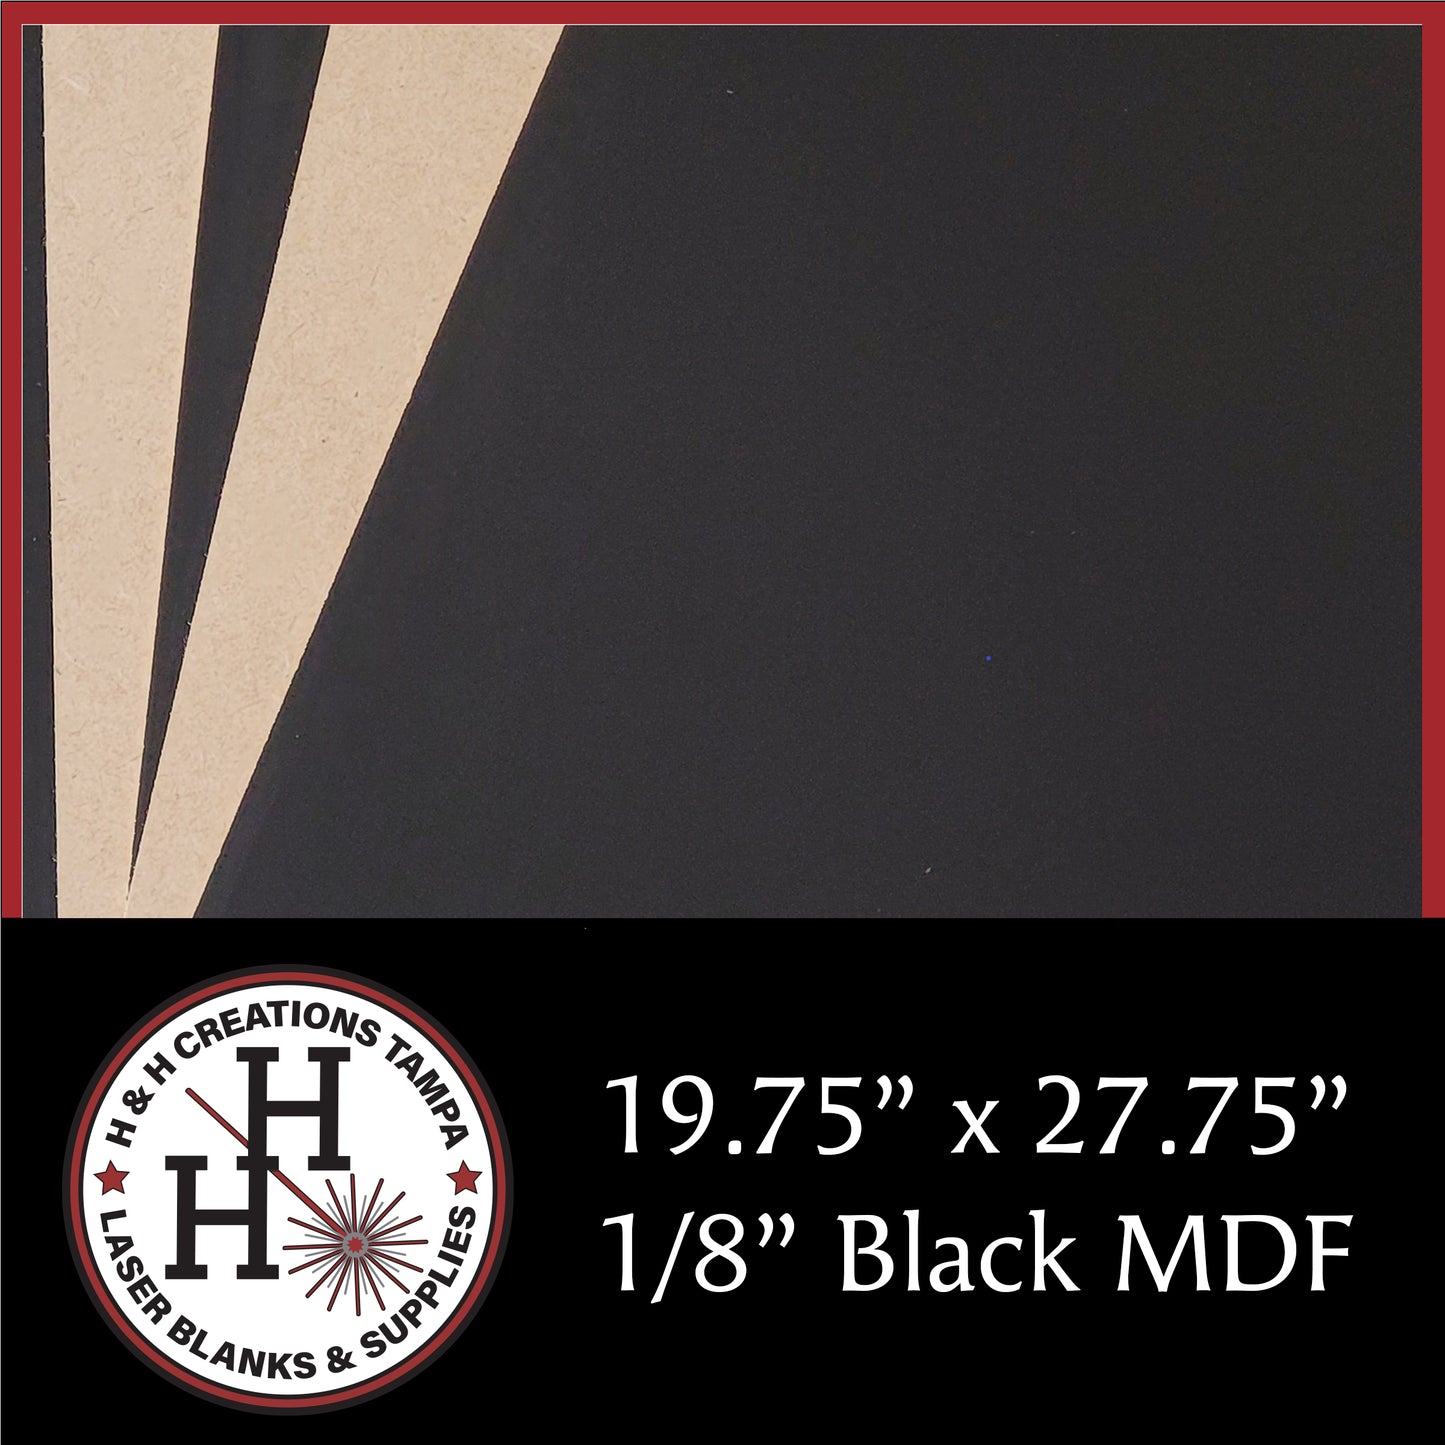 1/8" Premium Black Single-Sided MDF Draft Board 19.75" x 27.75"